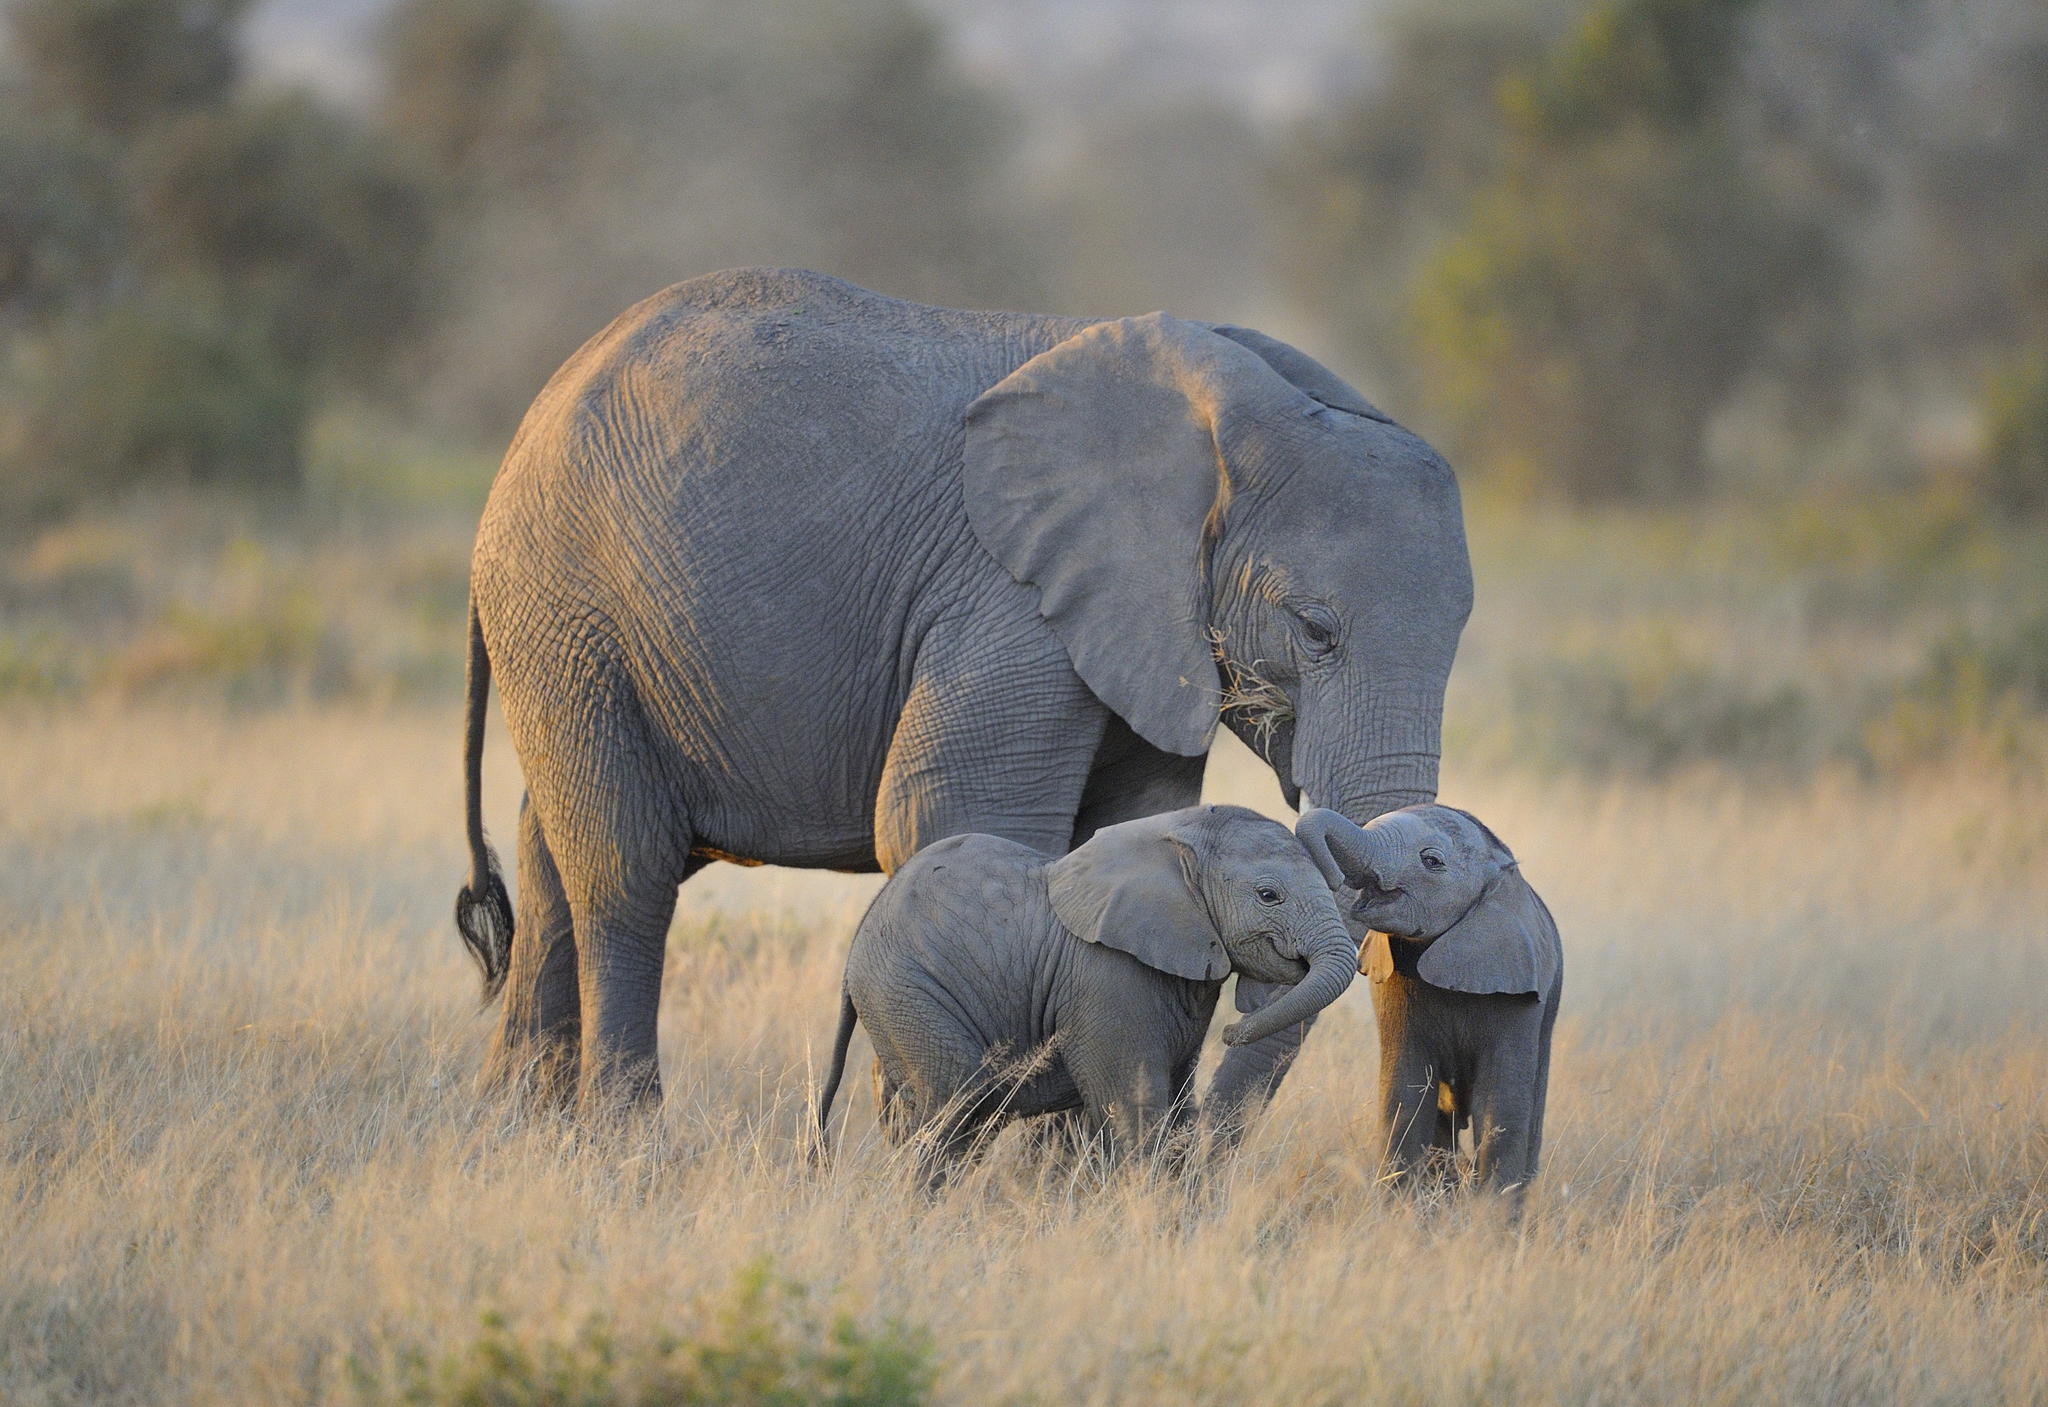  these elephants baby adorable 